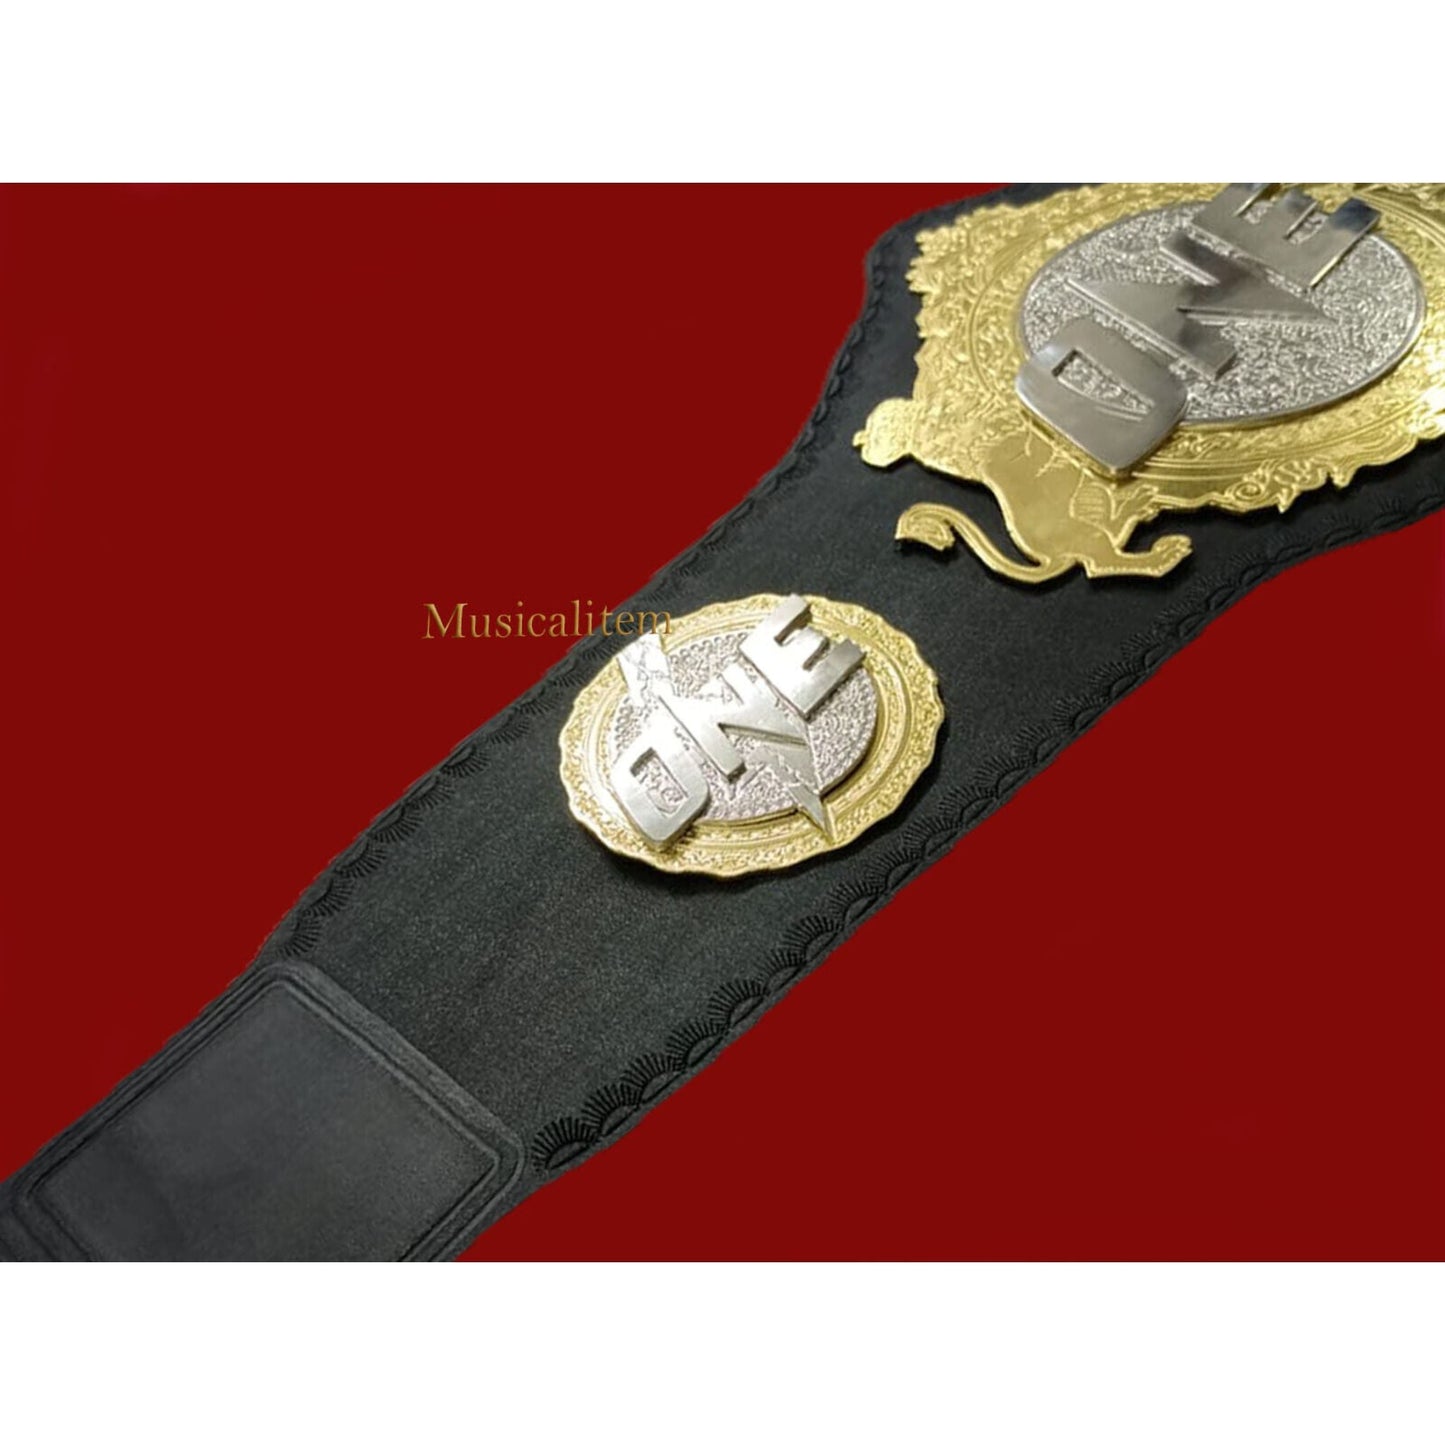 One World Fc MMA Championship Replica Title Belt